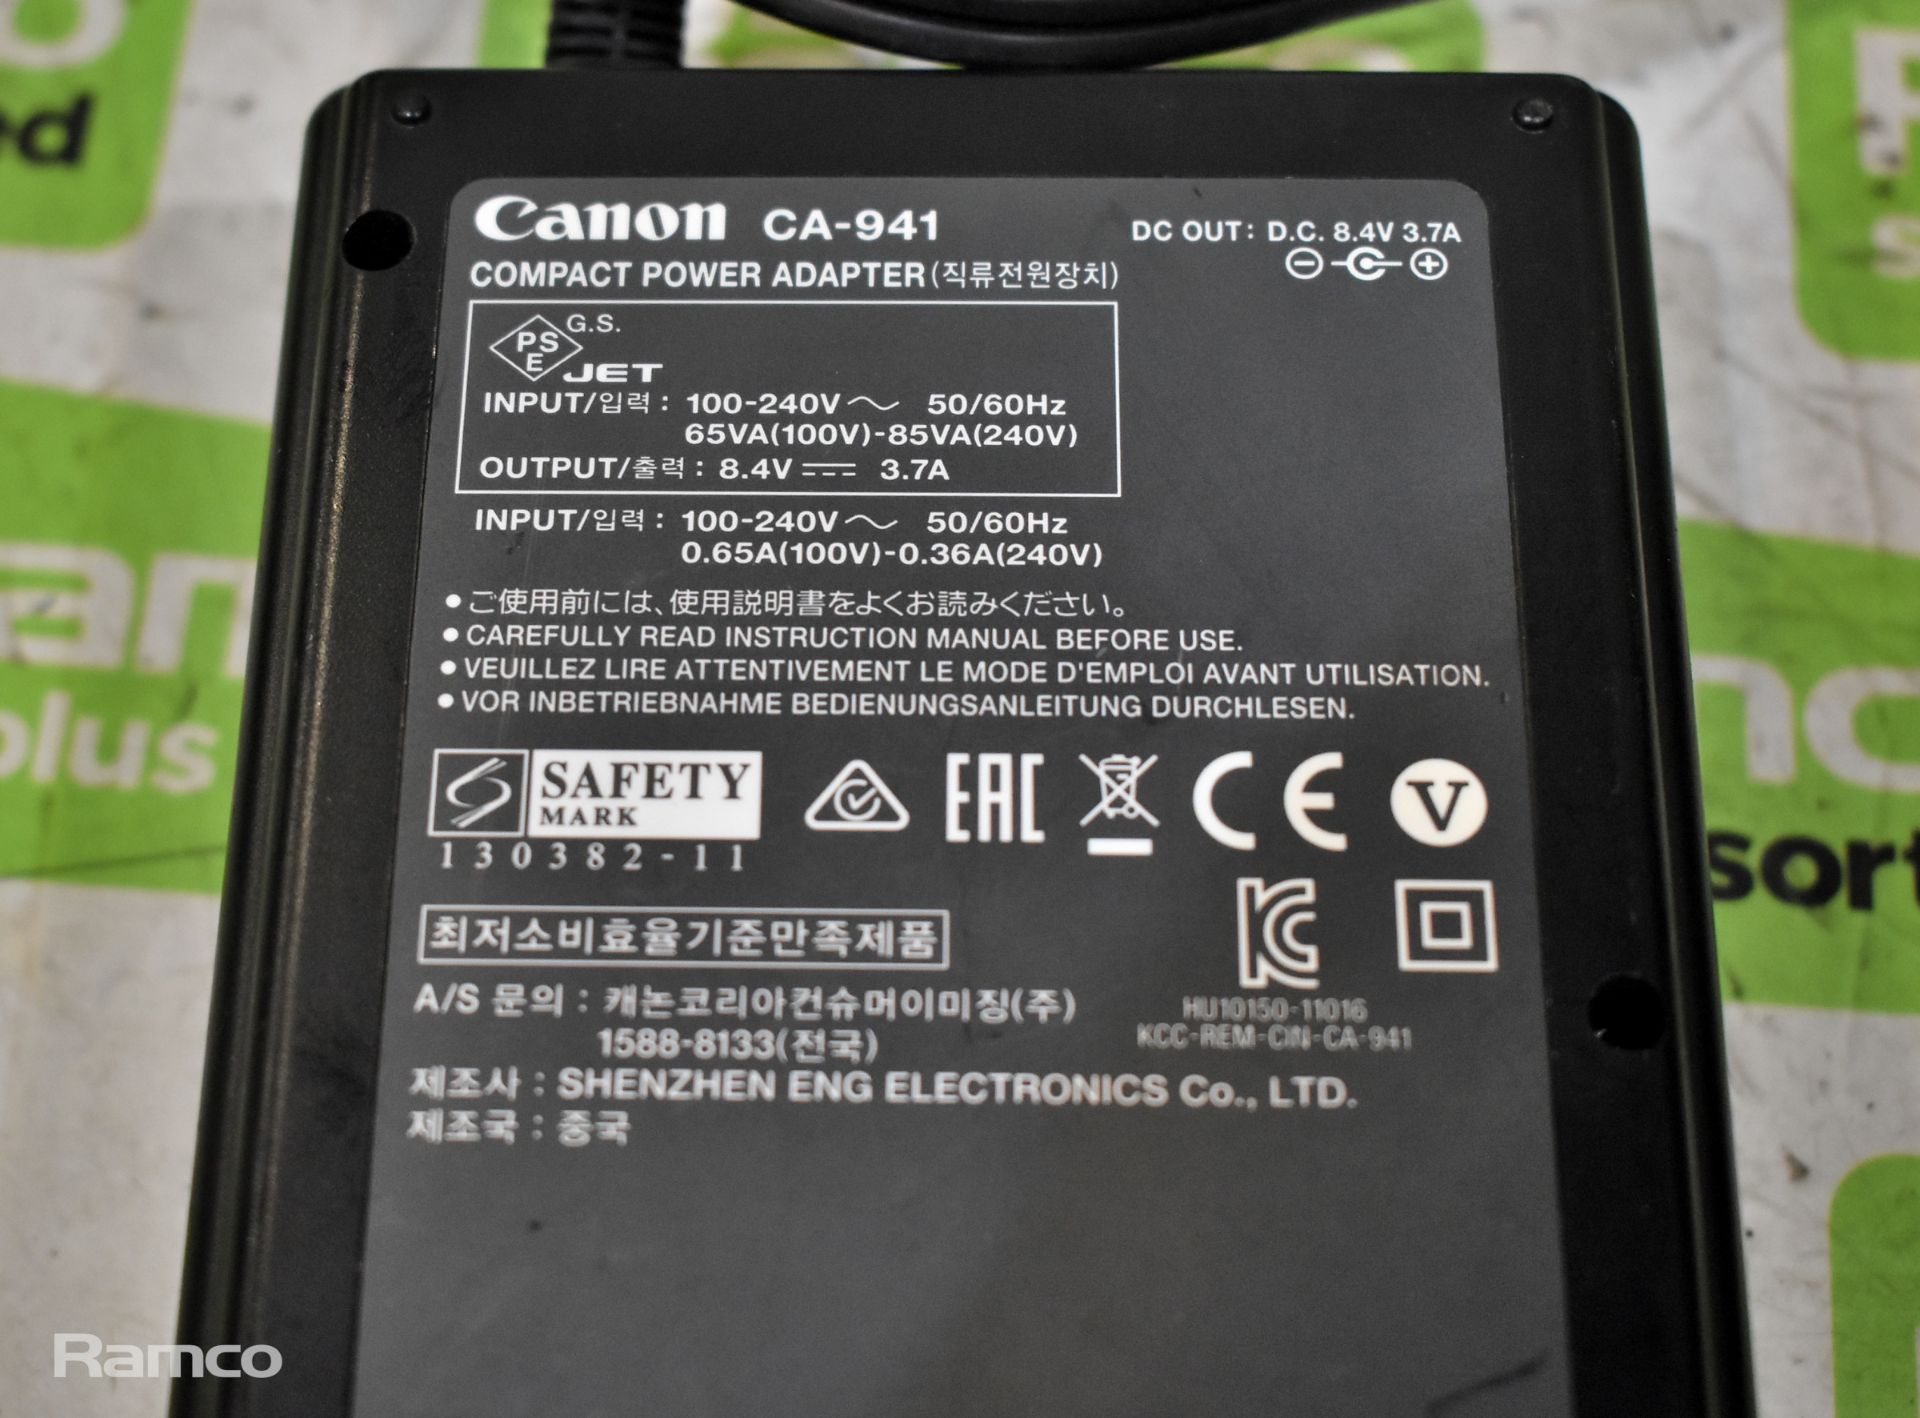 2x Canon CA-941 compact power adapters - Bild 3 aus 4